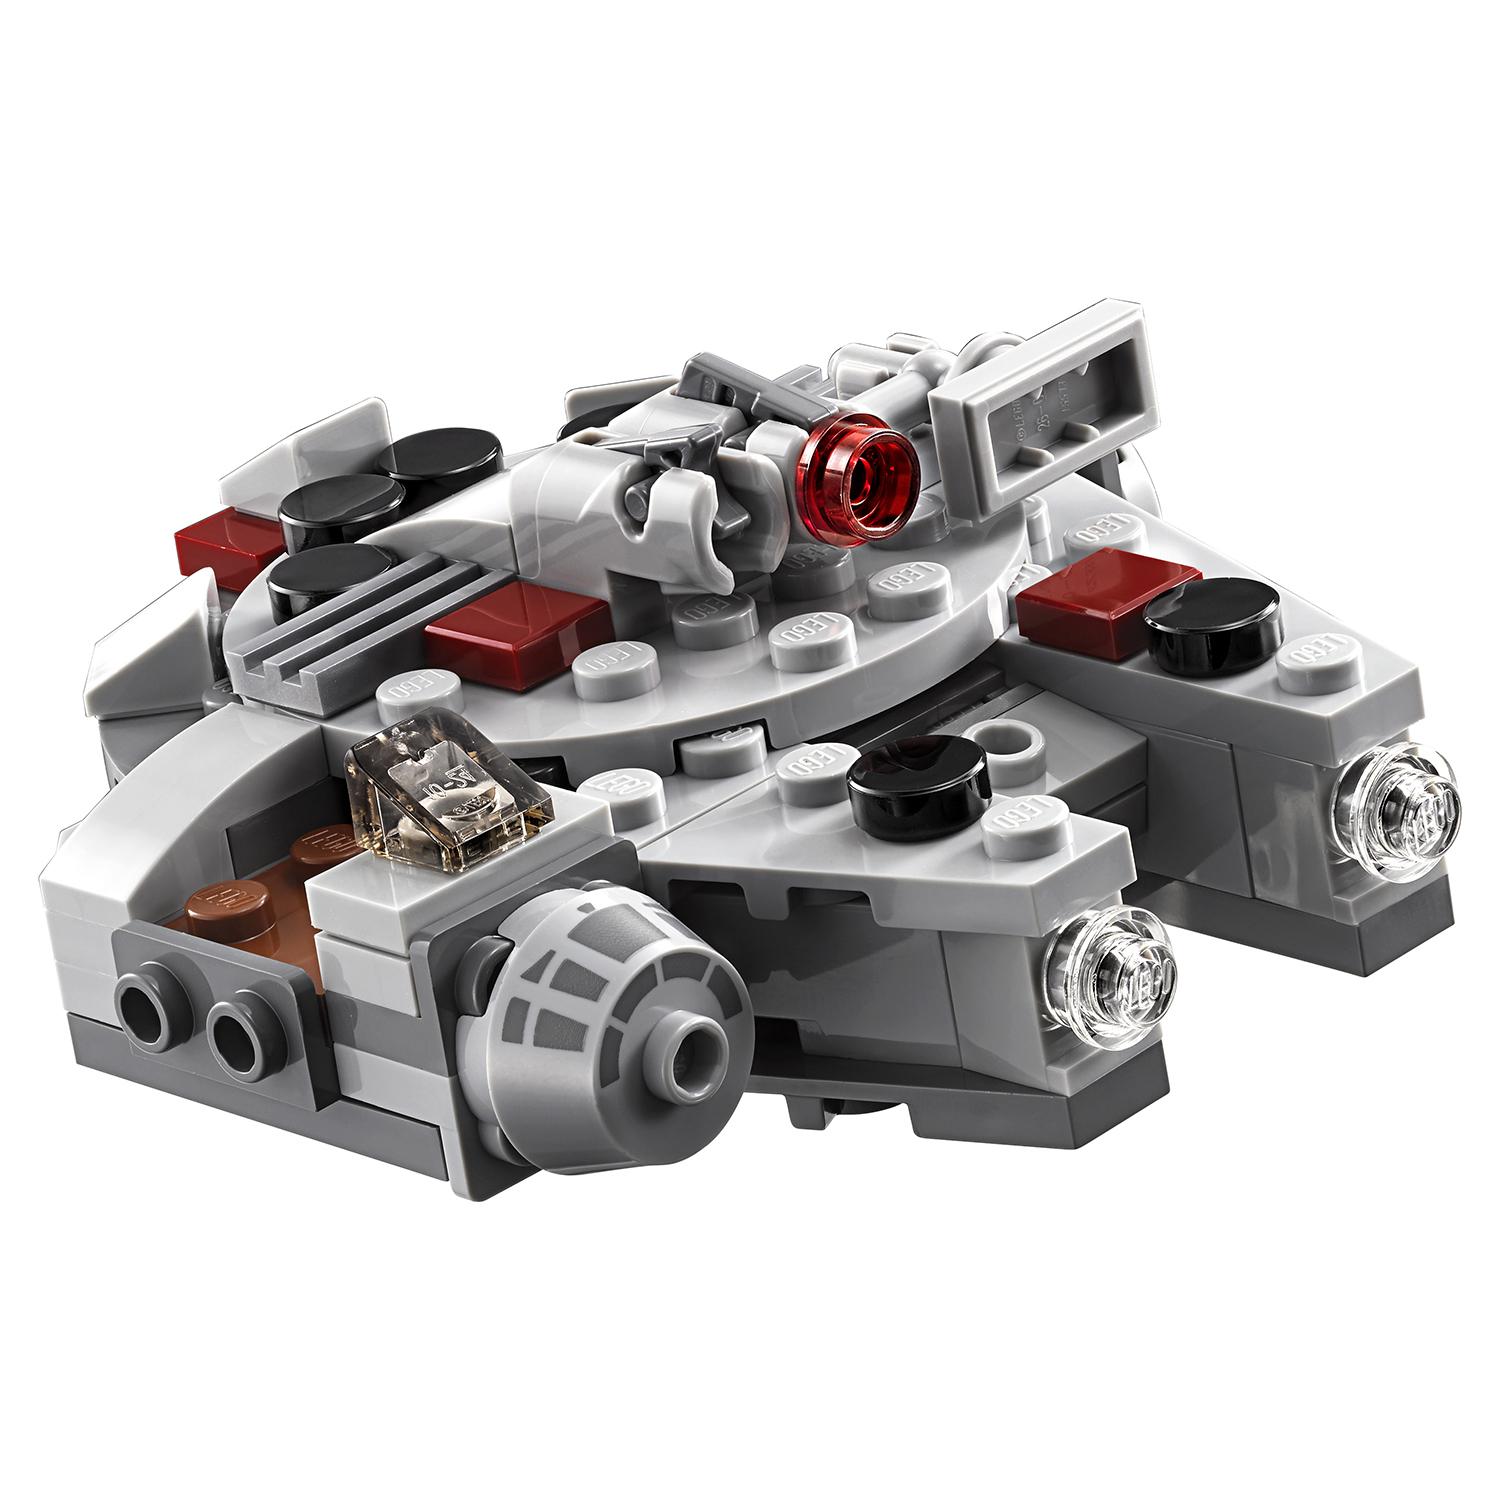 Lego Star Wars 75193 Микрофайтер Сокол Тысячелетия